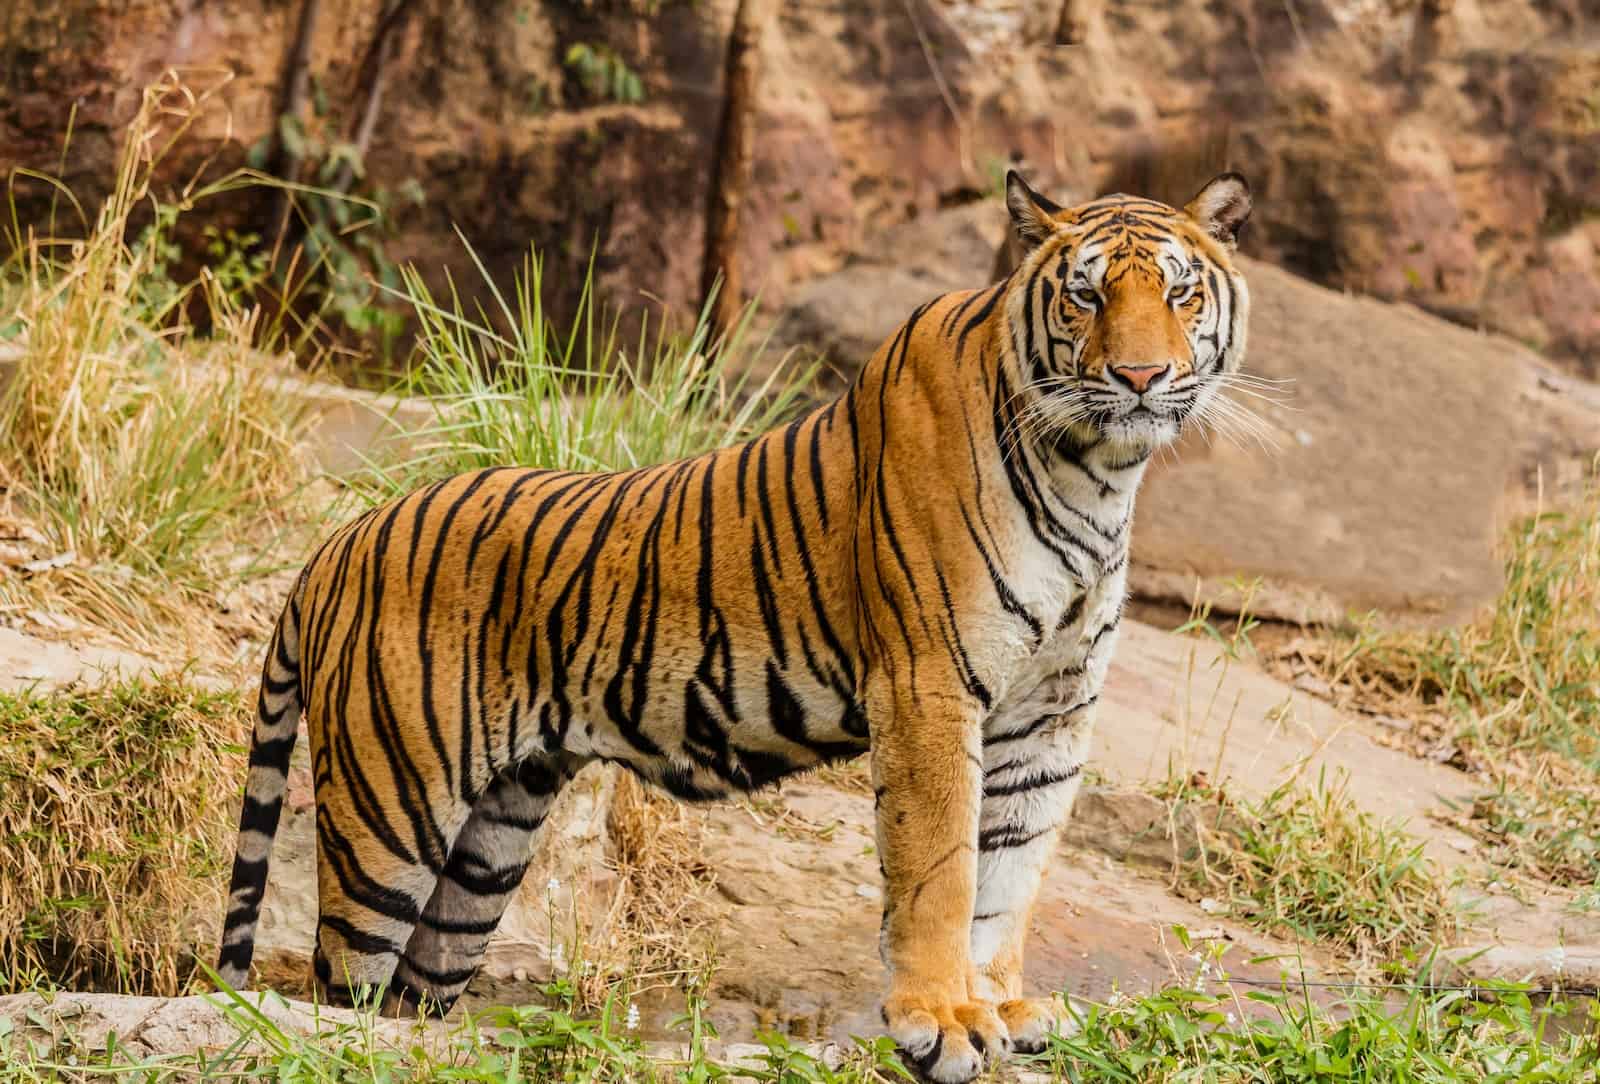 Bengal Tiger - Description, Habitat, Image, Diet, and Interesting Facts